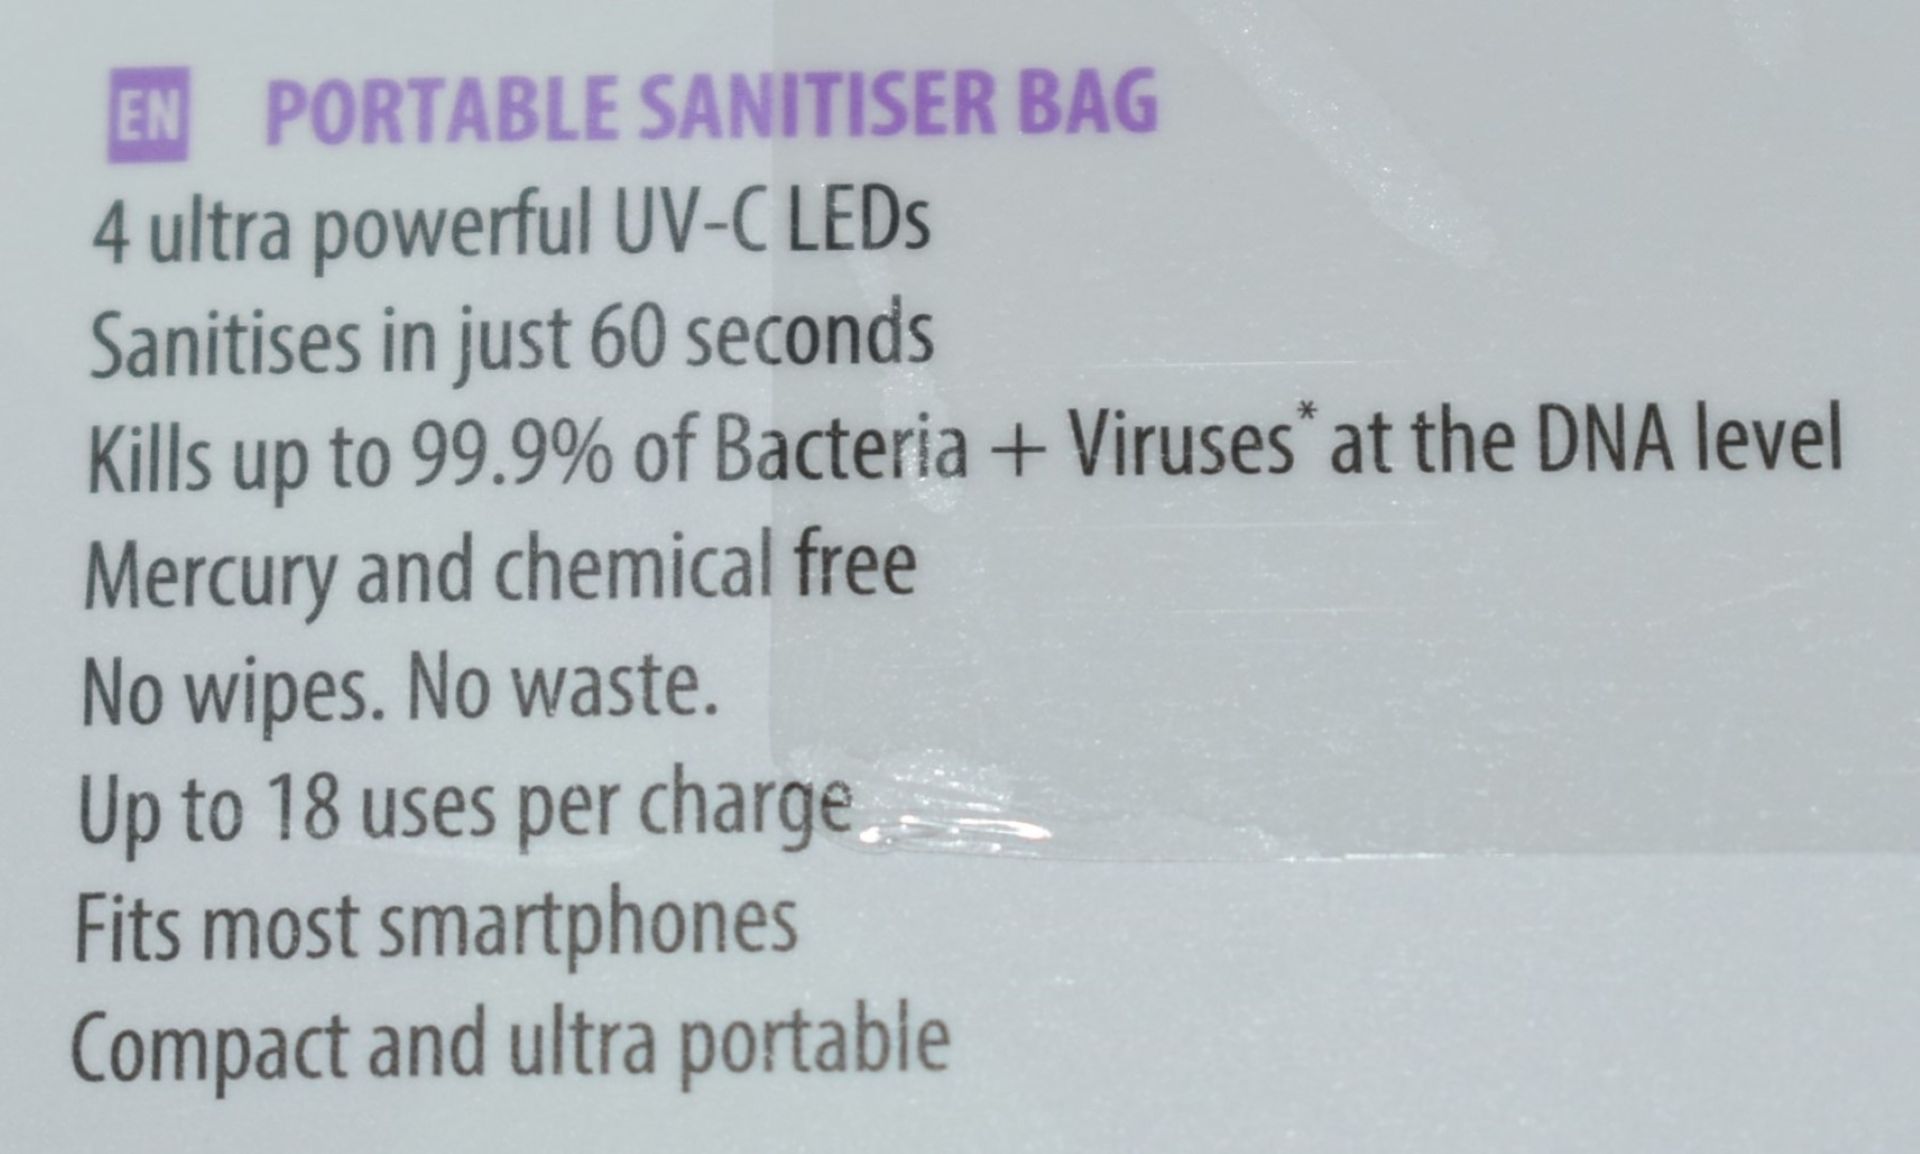 4 x Homedics UV Clean Portable Sanitiser Bags - Kills Upto 99.9% of Bacteria & Viruses in Just 60 - Image 9 of 19